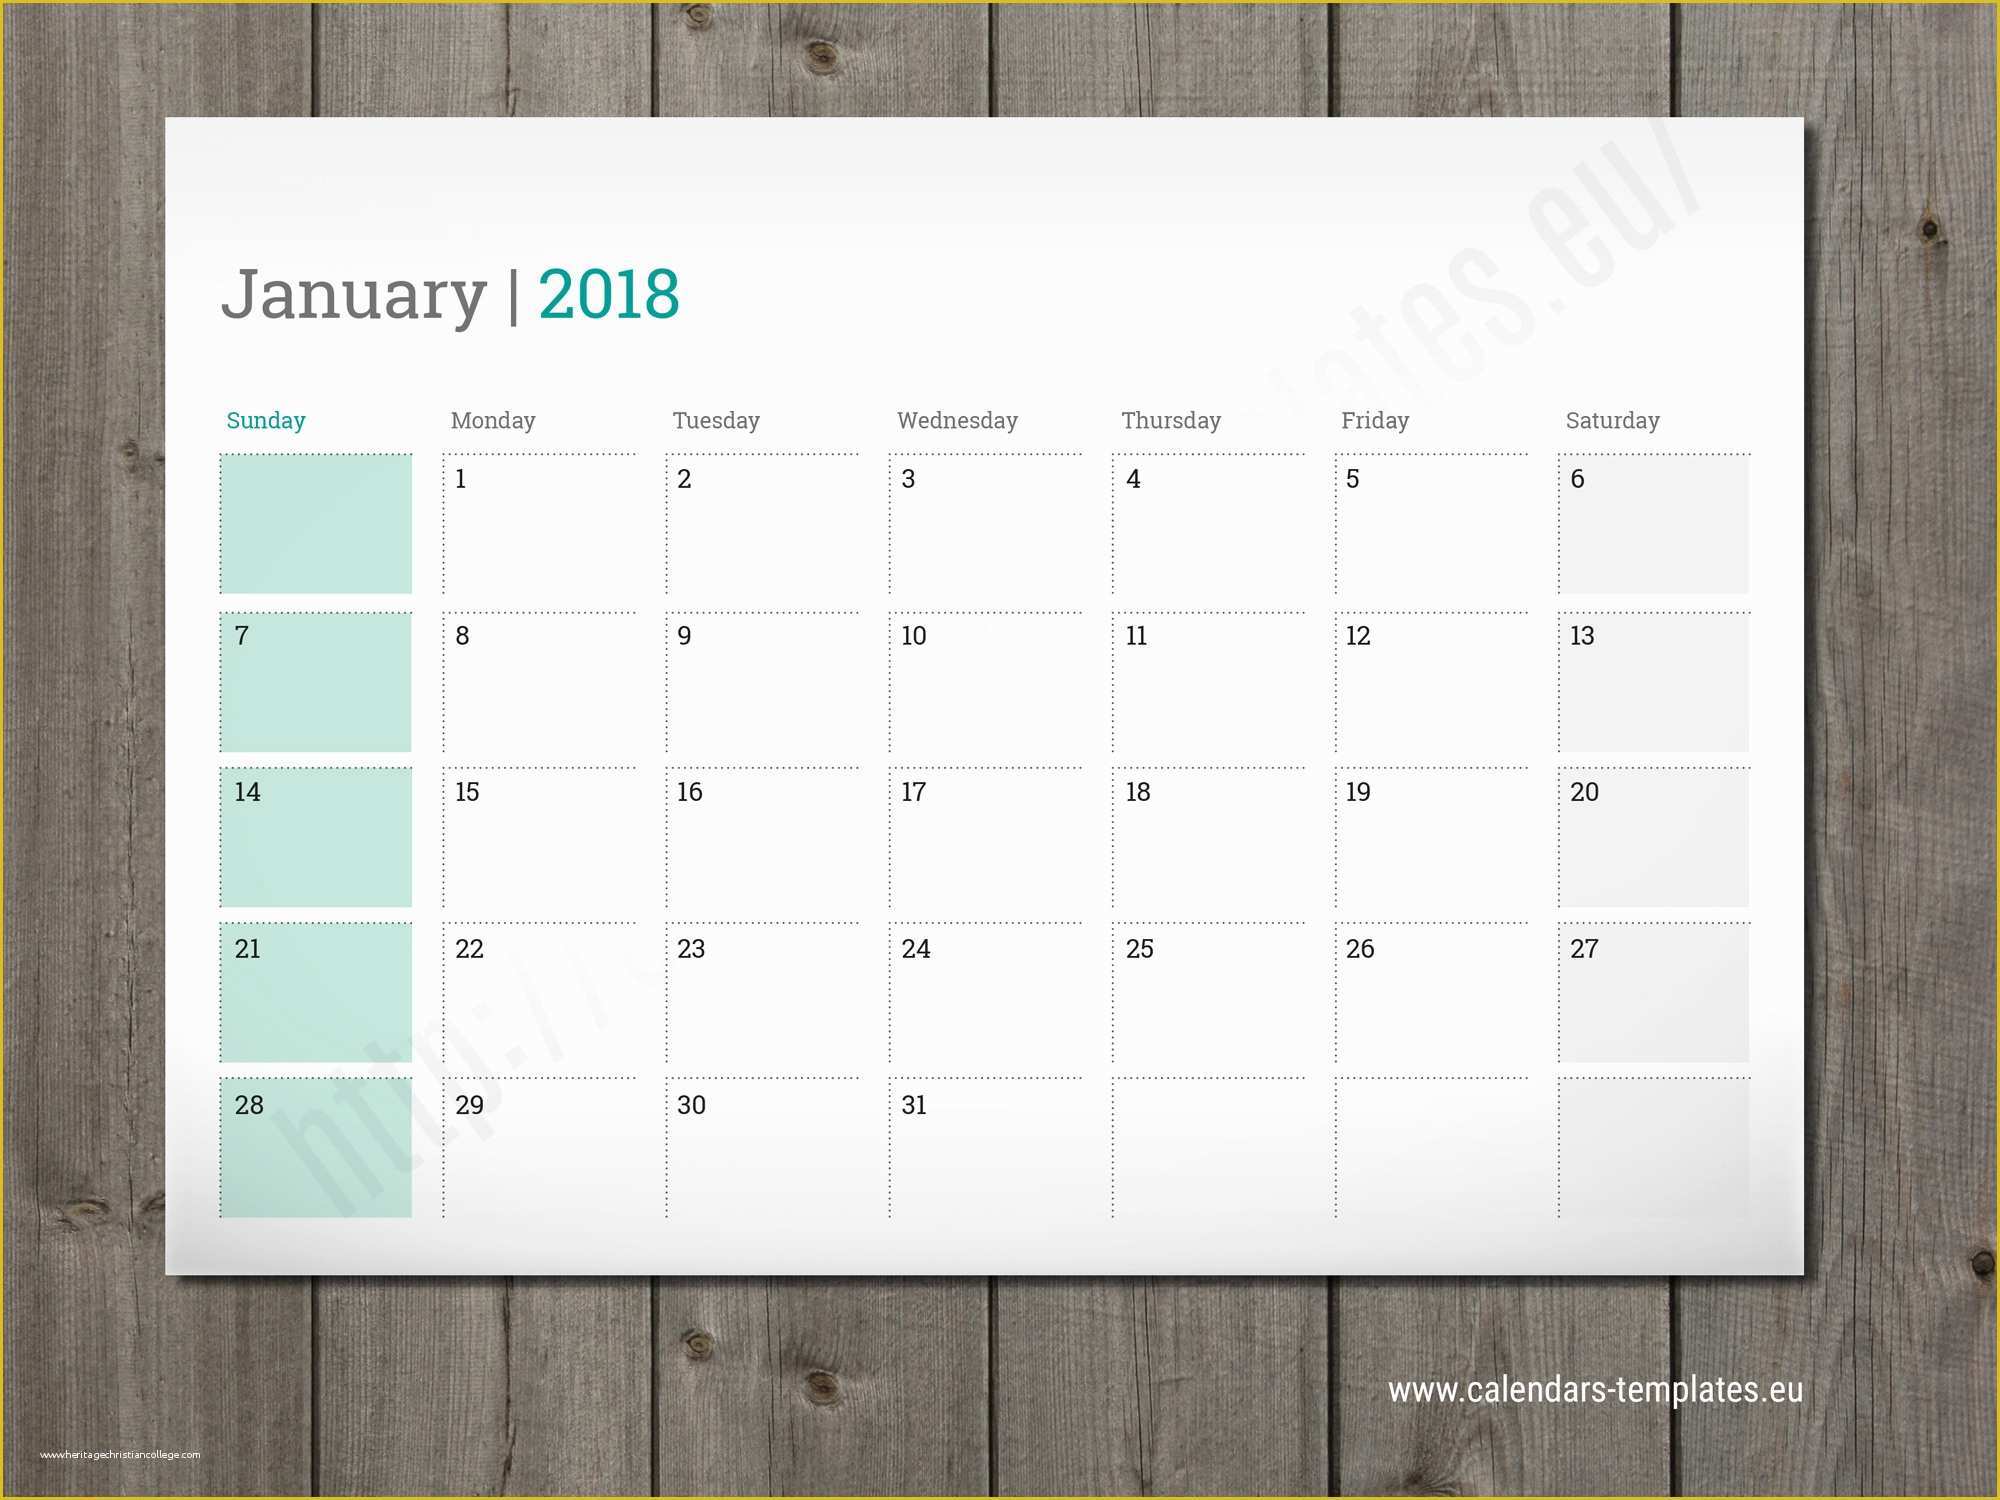 Free Indesign Calendar Template 2018 Of Template Calendar 2018 Indesign